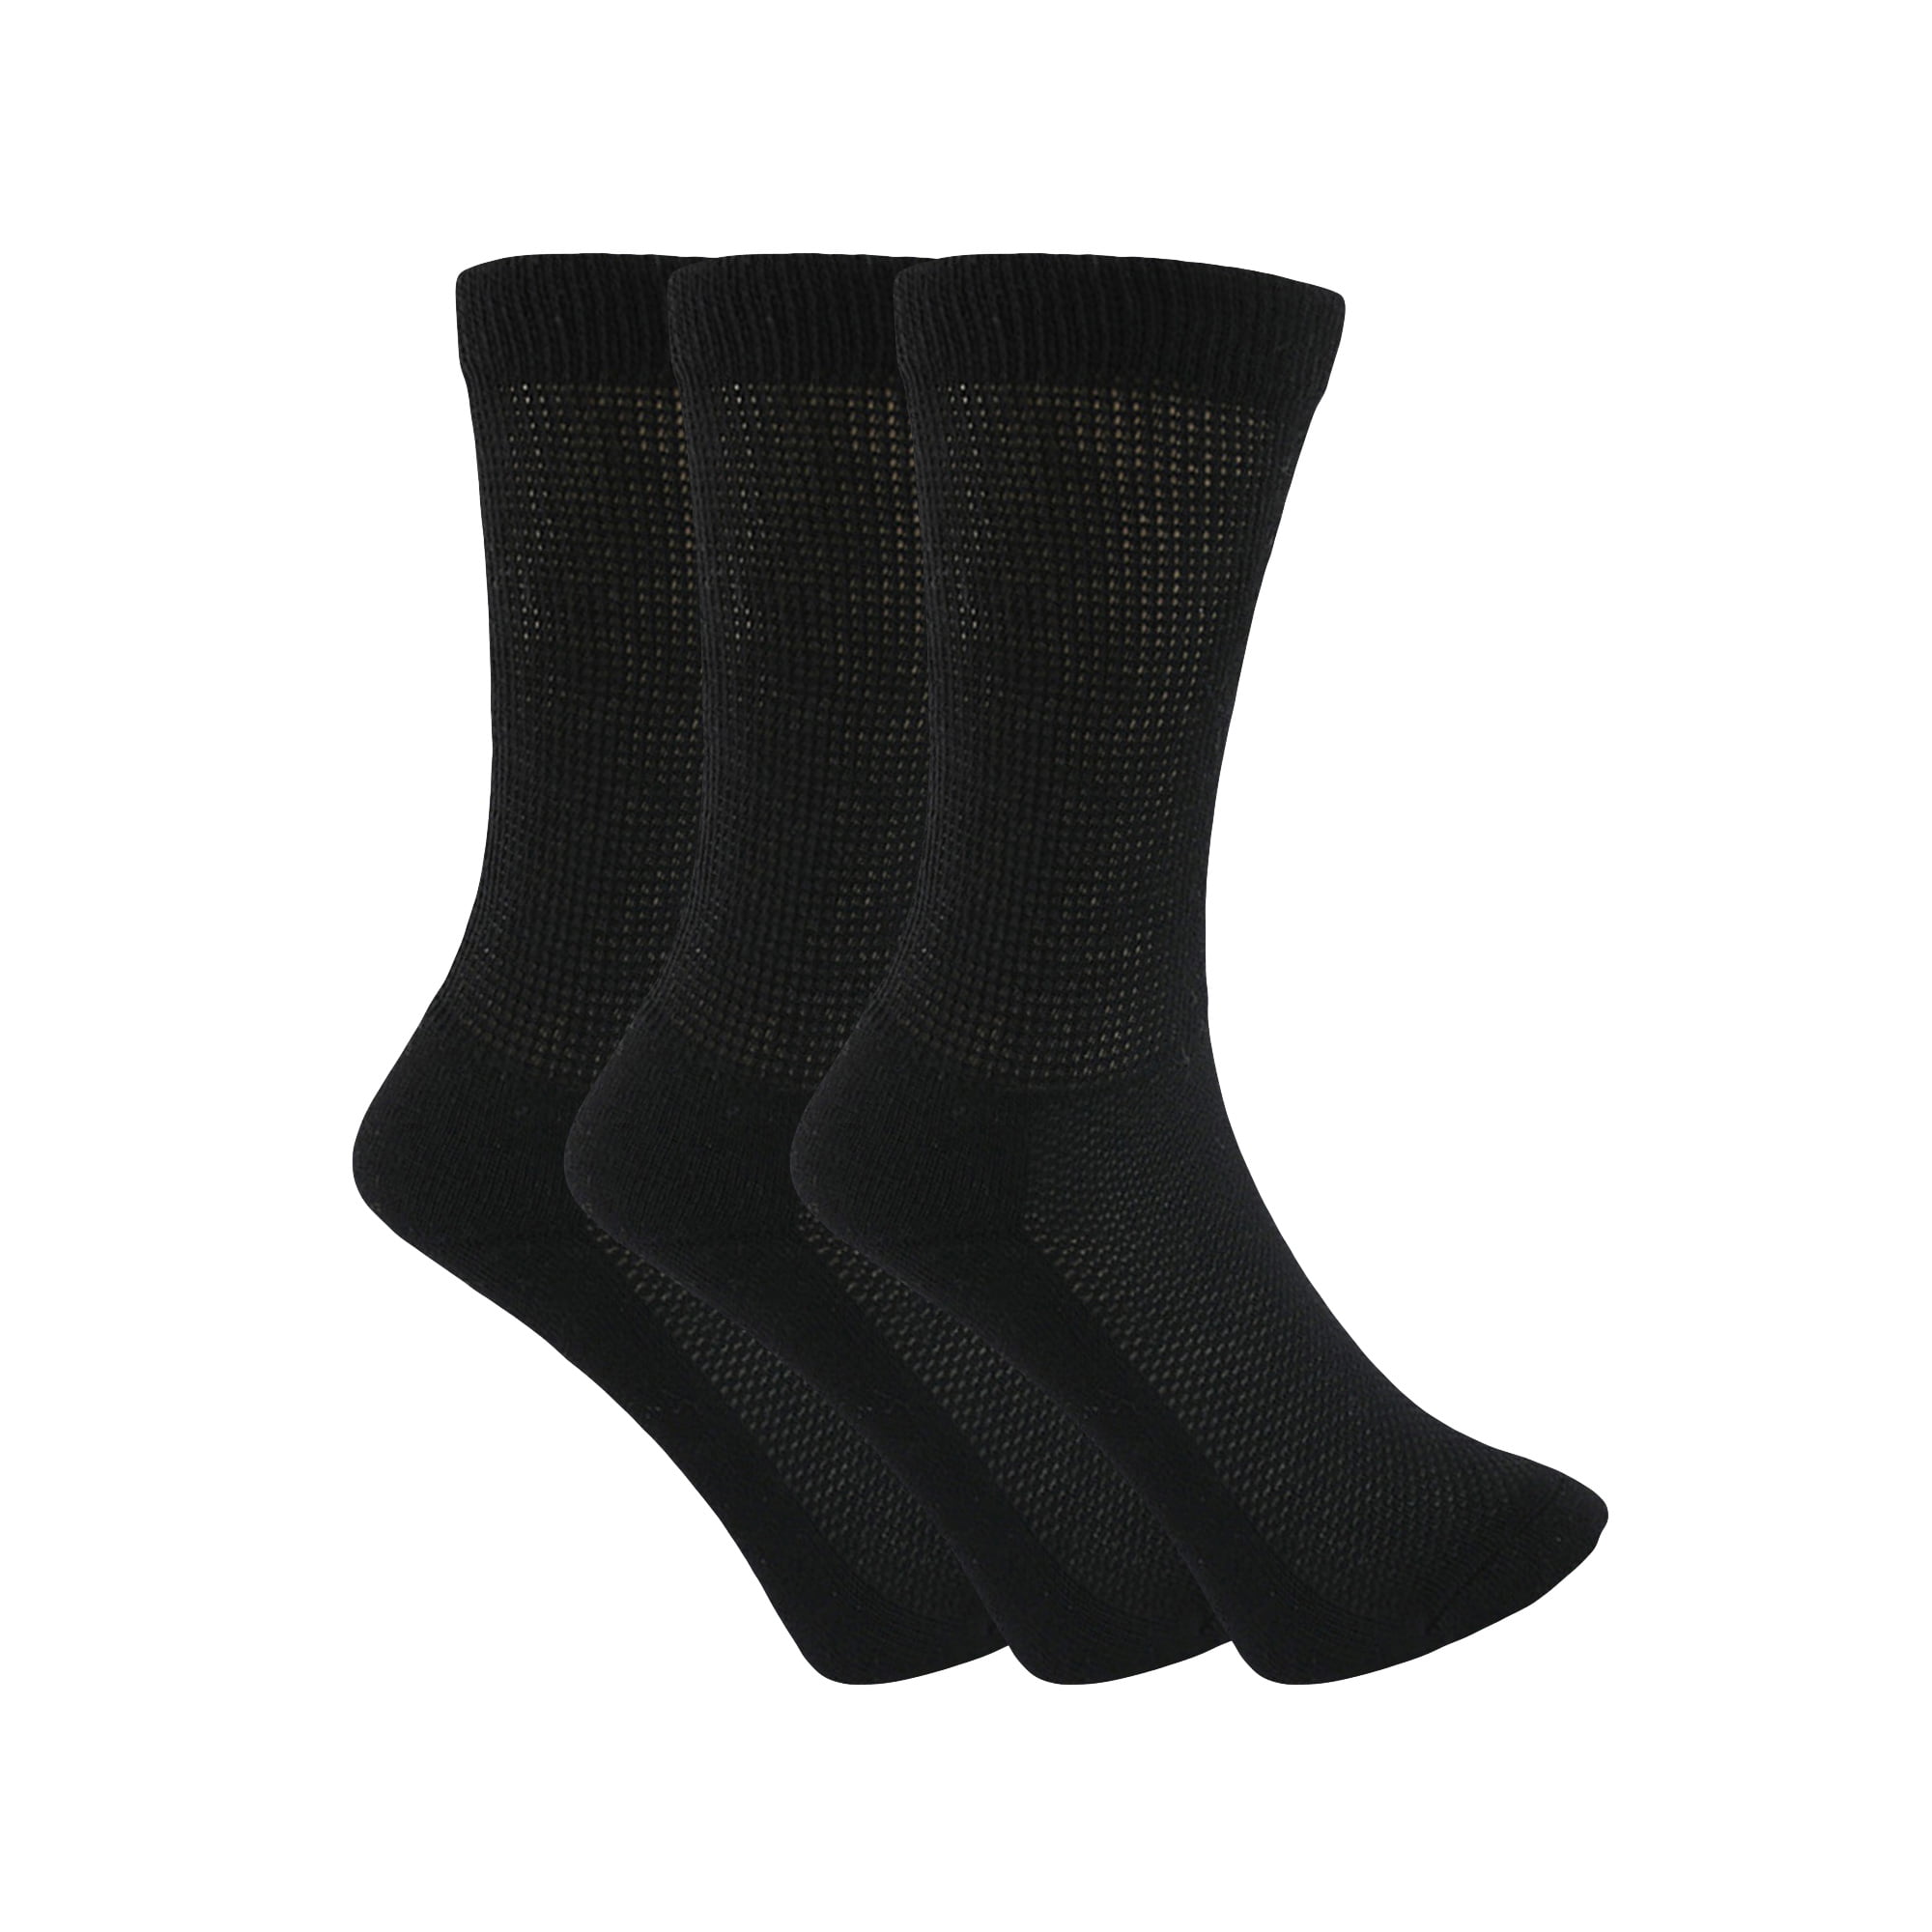 AWS/American Made - Diabetic Crew Socks Black for Men and Women 3 PAIRS ...